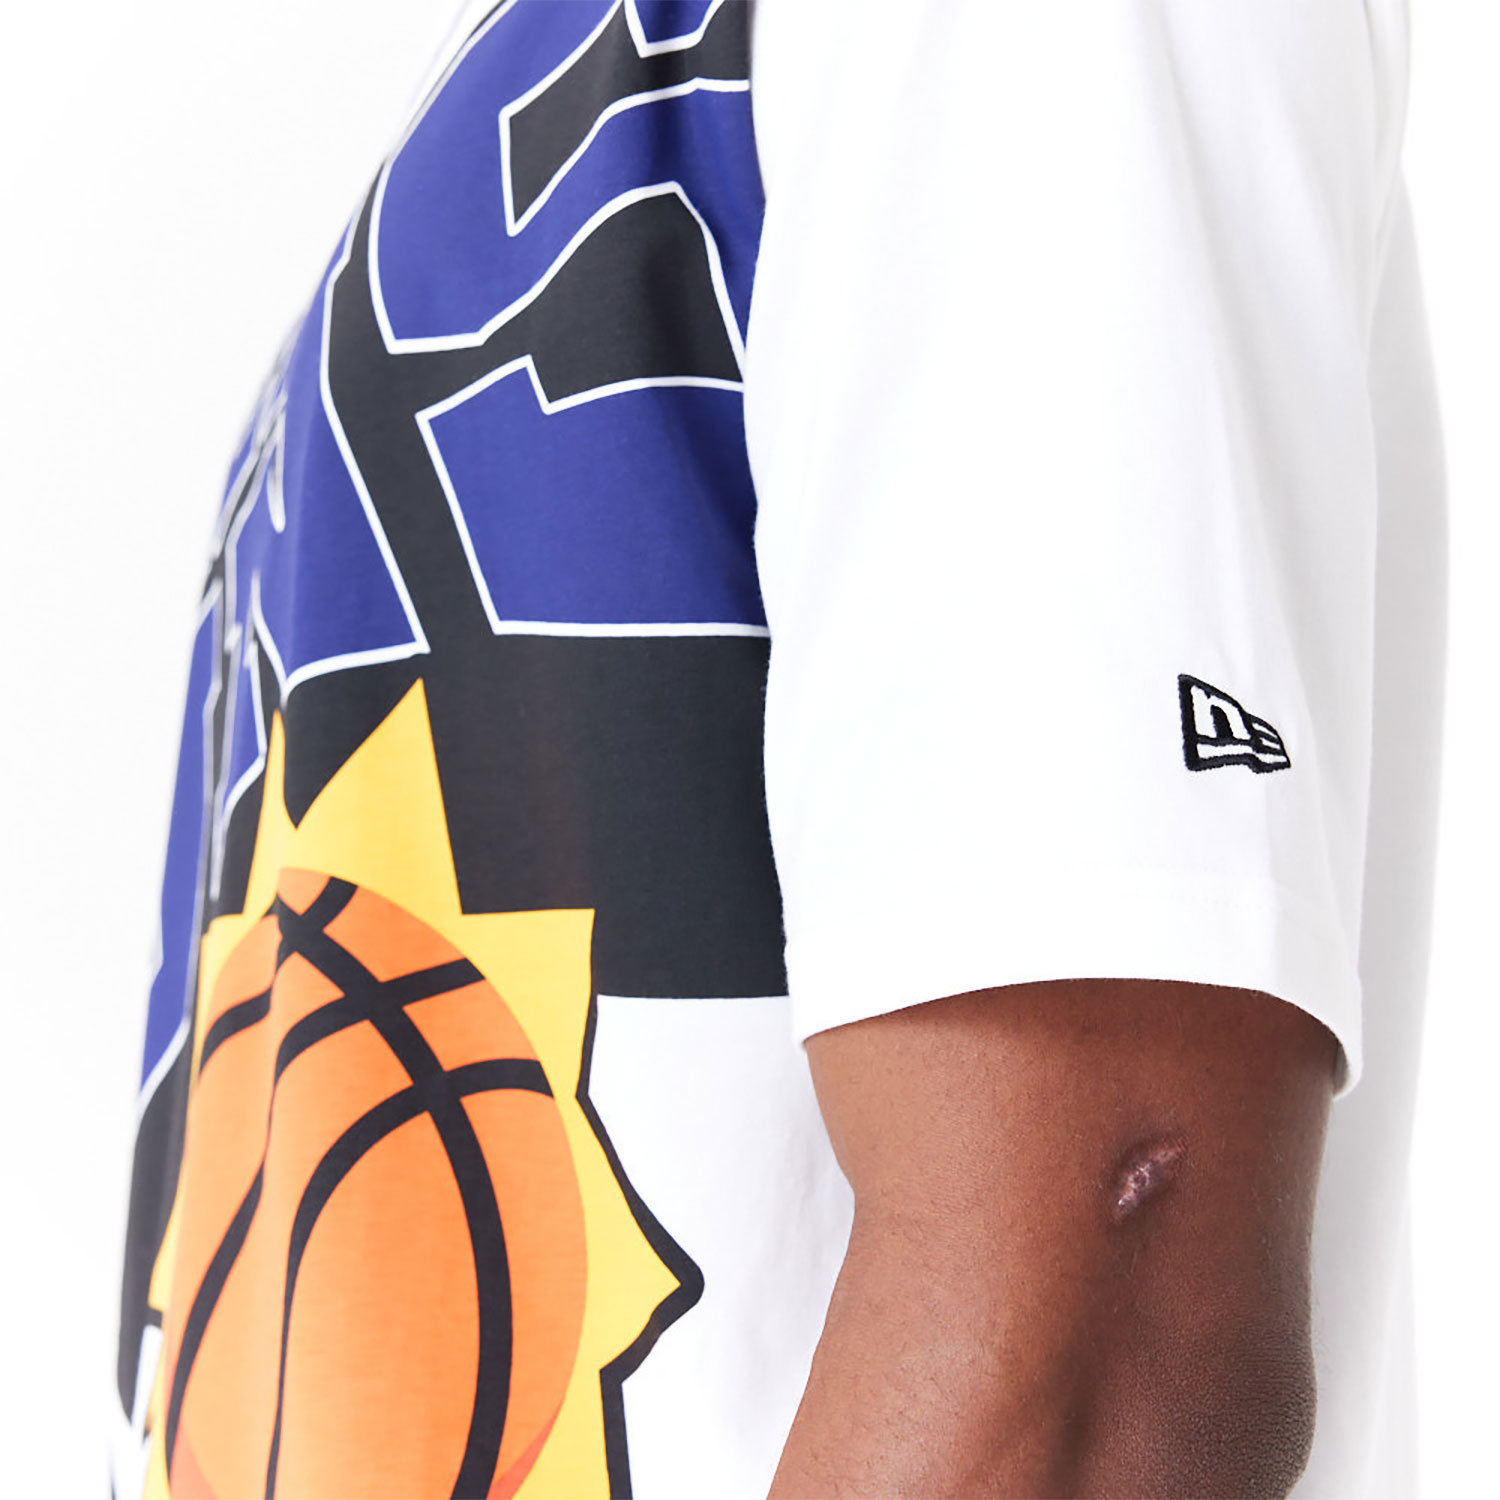 Phoenix Suns NBA Large Wordmark White Oversized T-Shirt